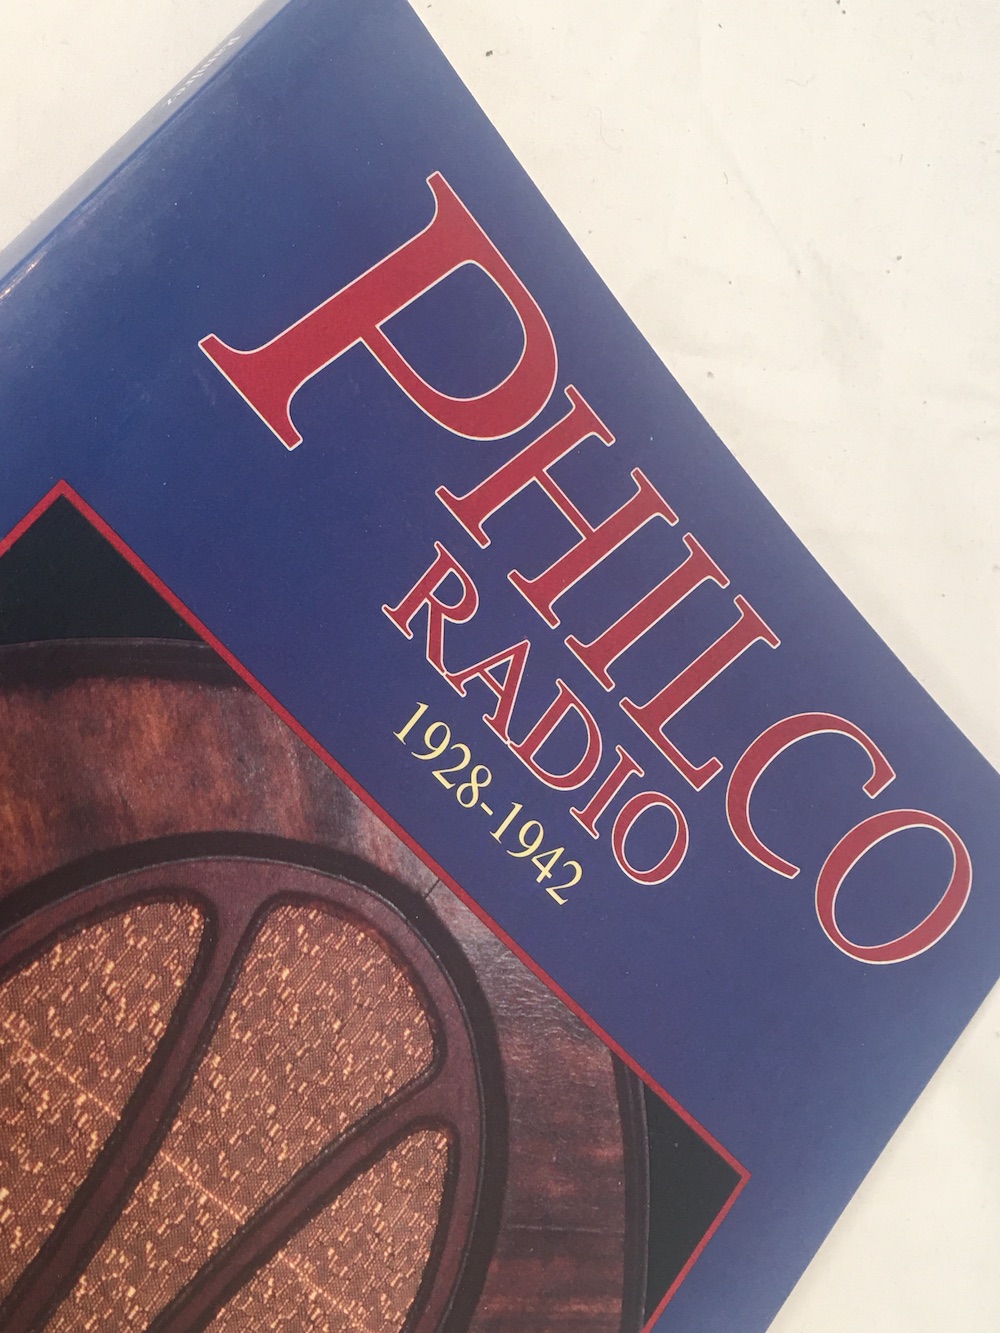 philco table radio